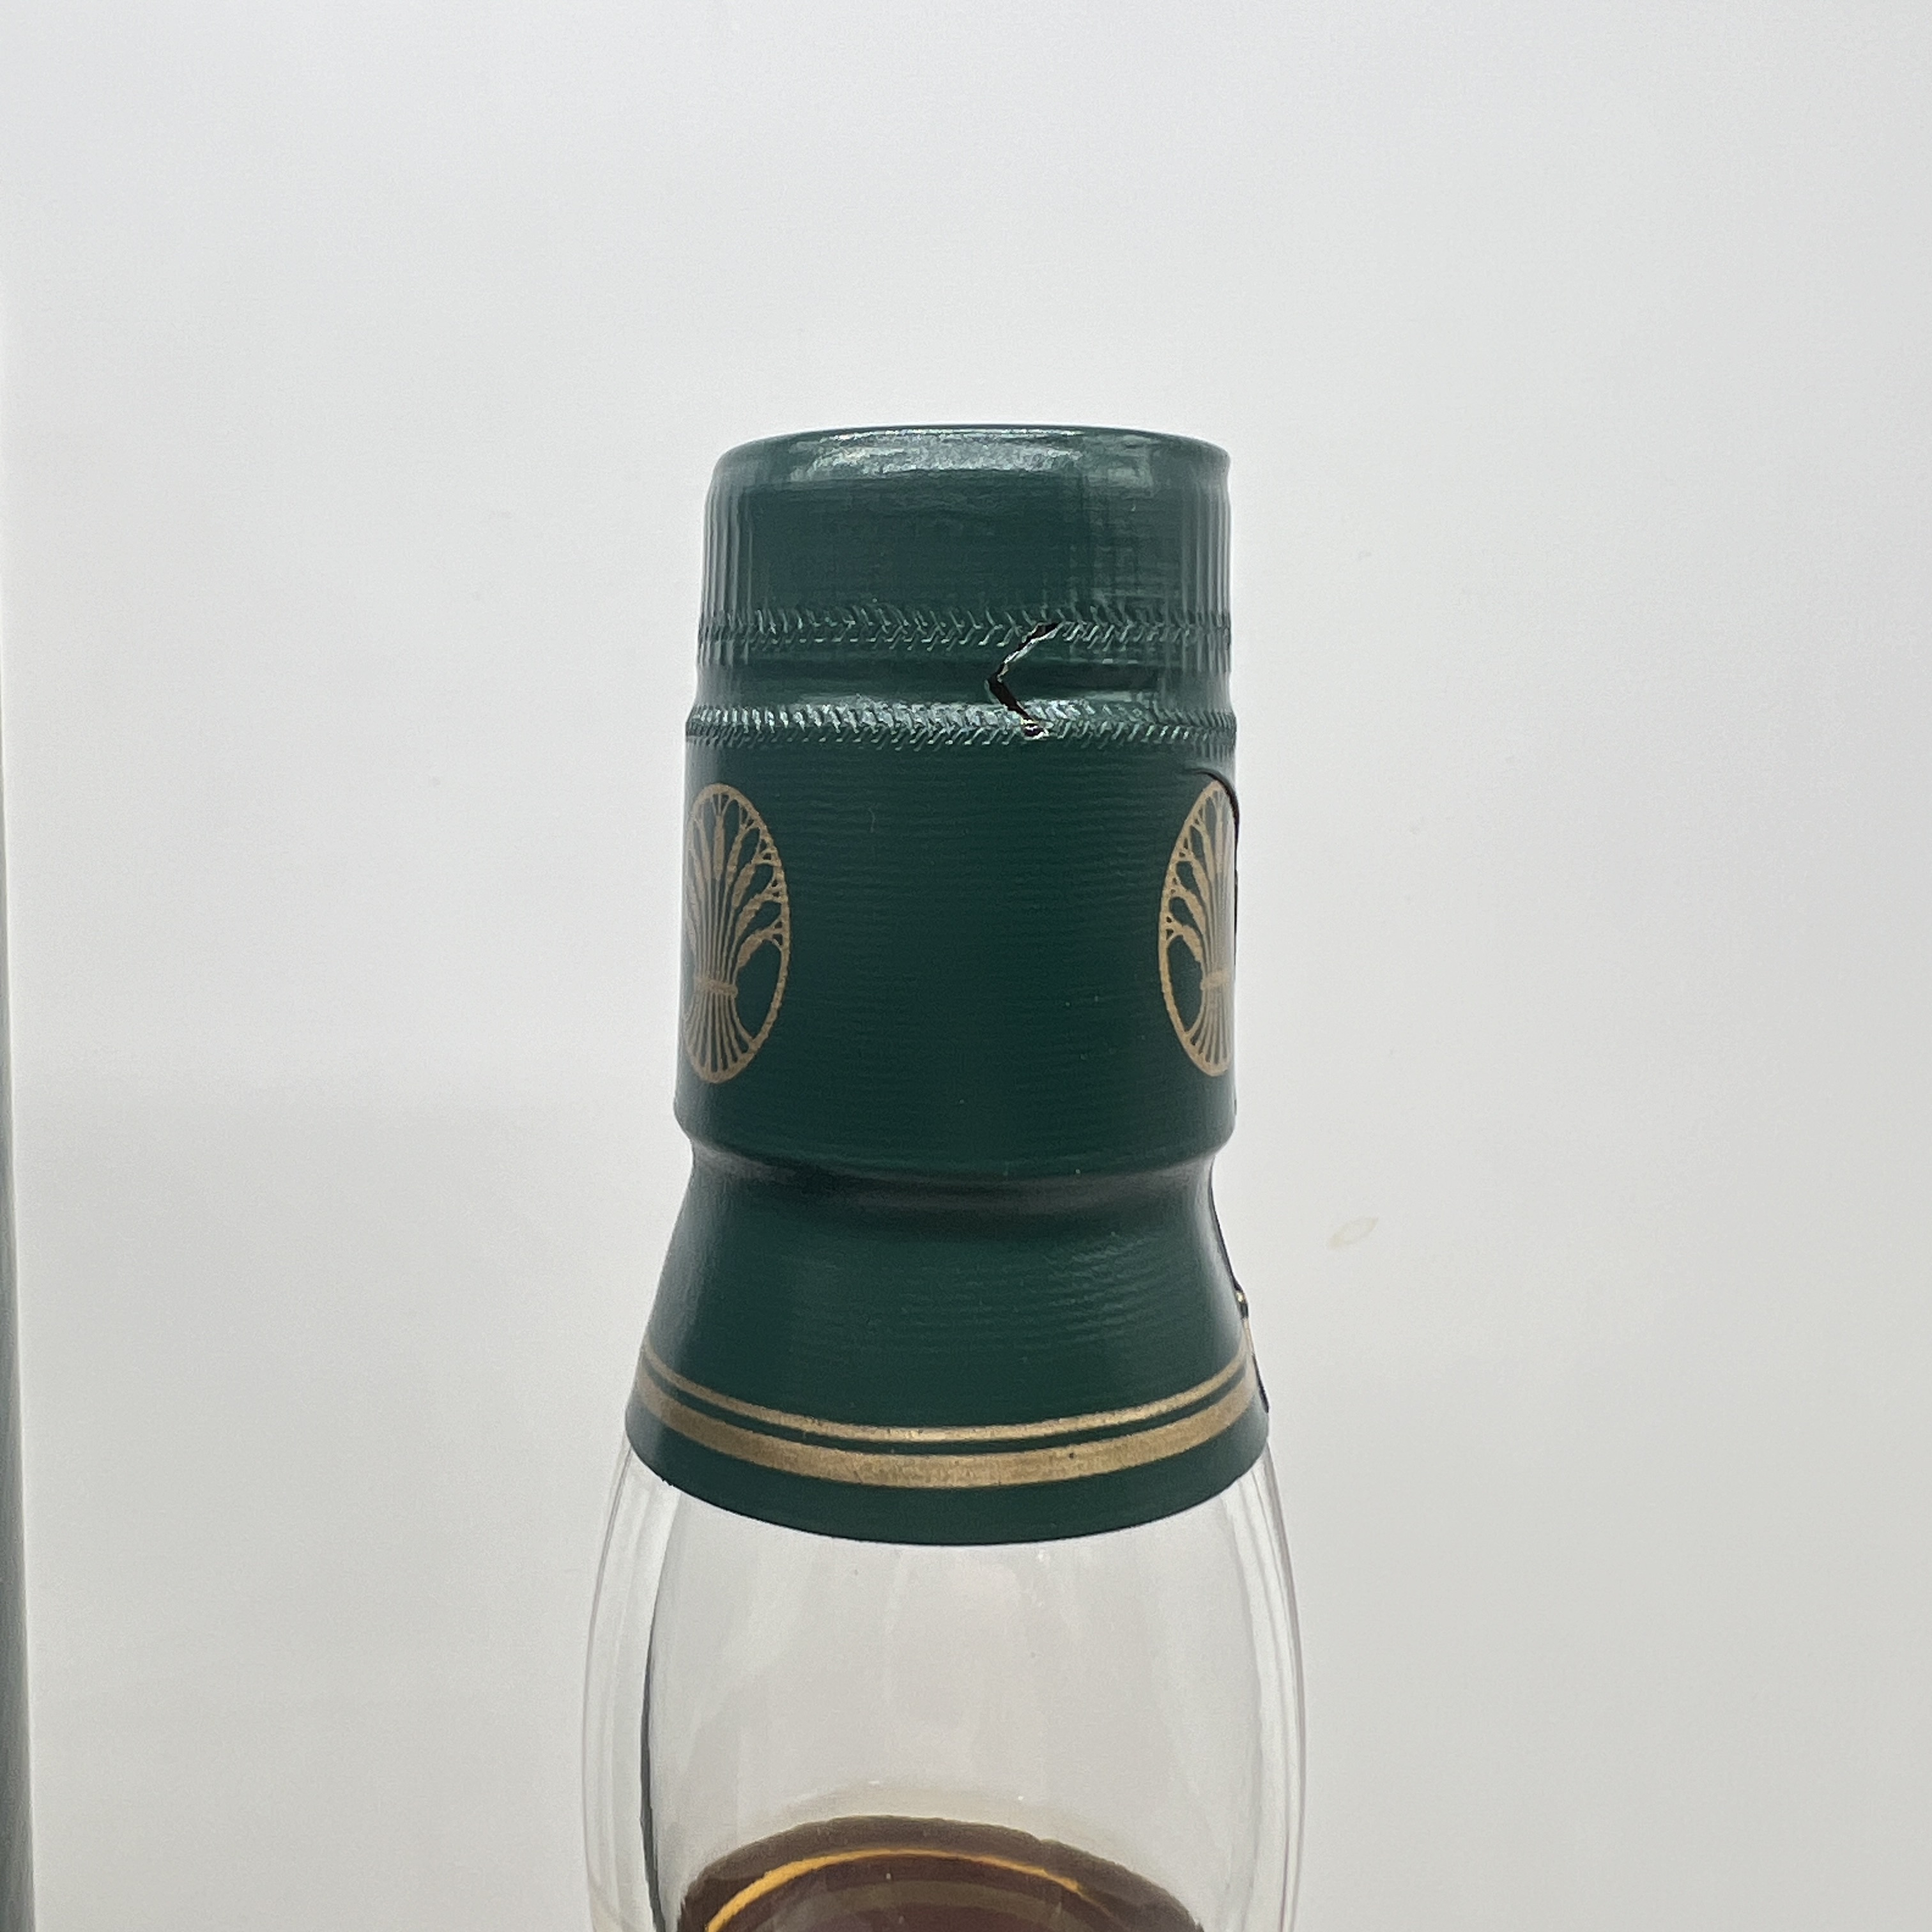 A bottle of Glengoyne whisky - Image 3 of 3